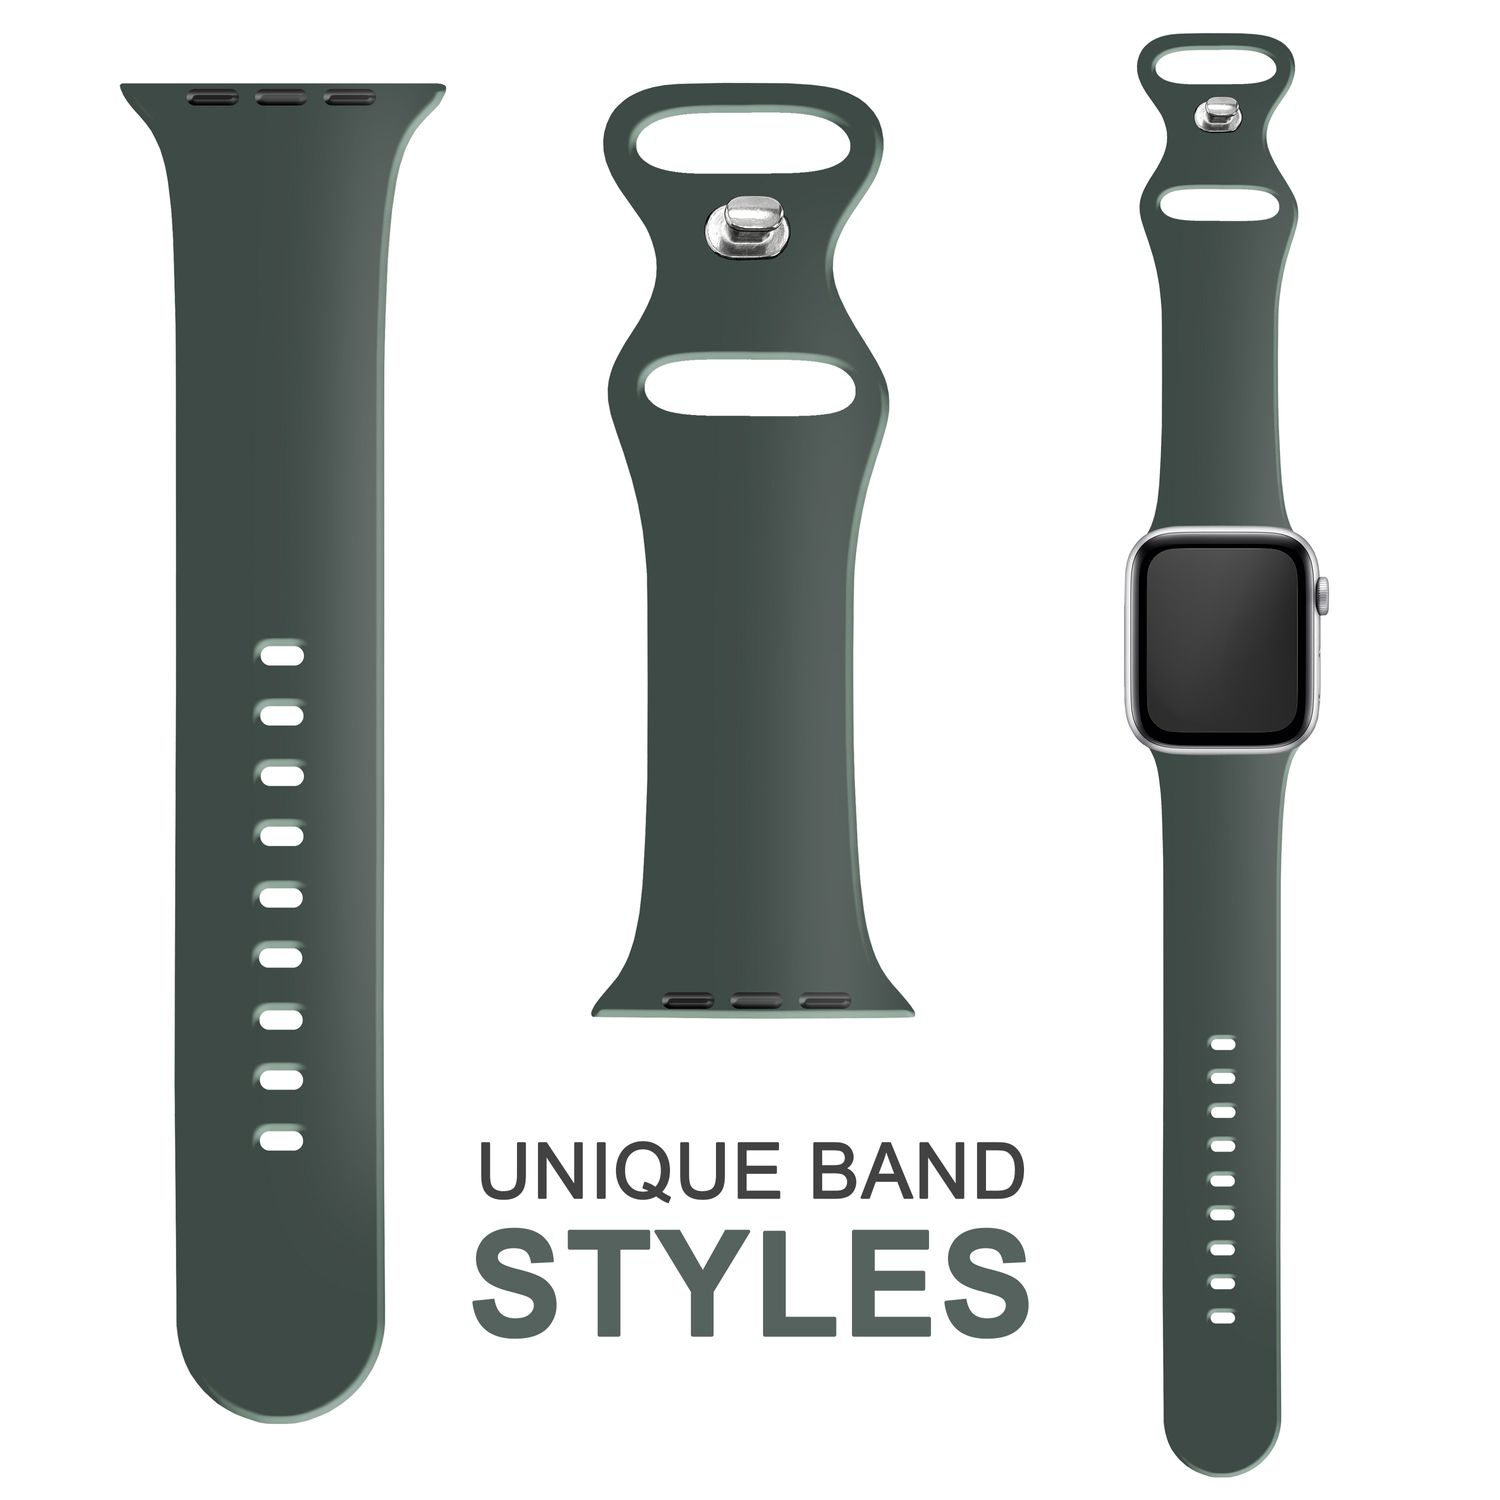 Oliv Apple Ersatzarmband, 42mm/44mm/45mm/49mm, Armband, Grün NALIA Watch Silikon Smartwatch Apple,